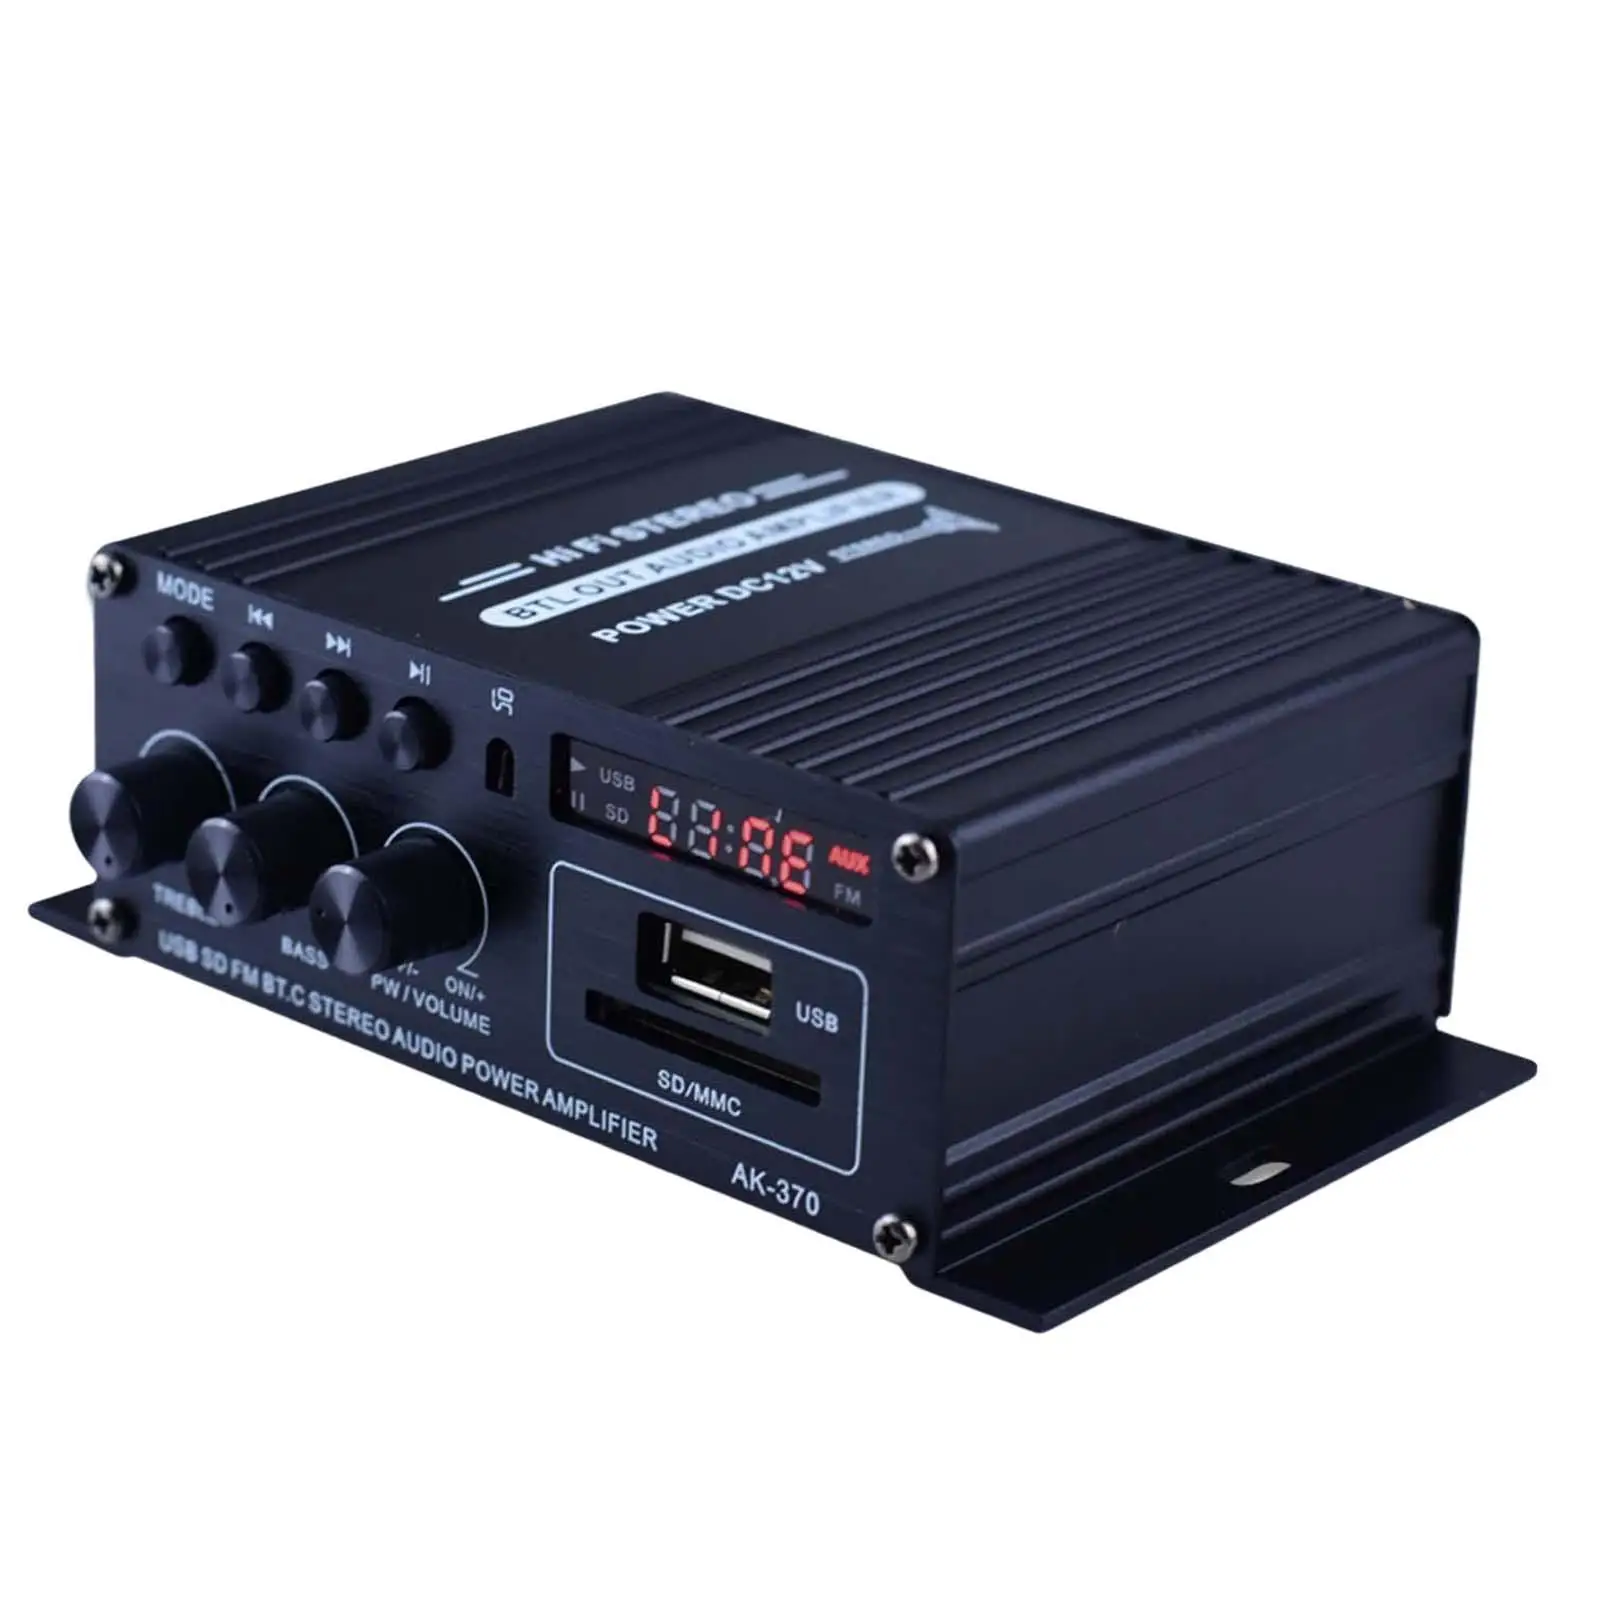 Power Amplifier USB SD BT FM 12V-24V 2.0 Channel for Car Home Bar Party AK-370 Bluetooth Amplifier Mini HiFi Stereo Amp Speaker